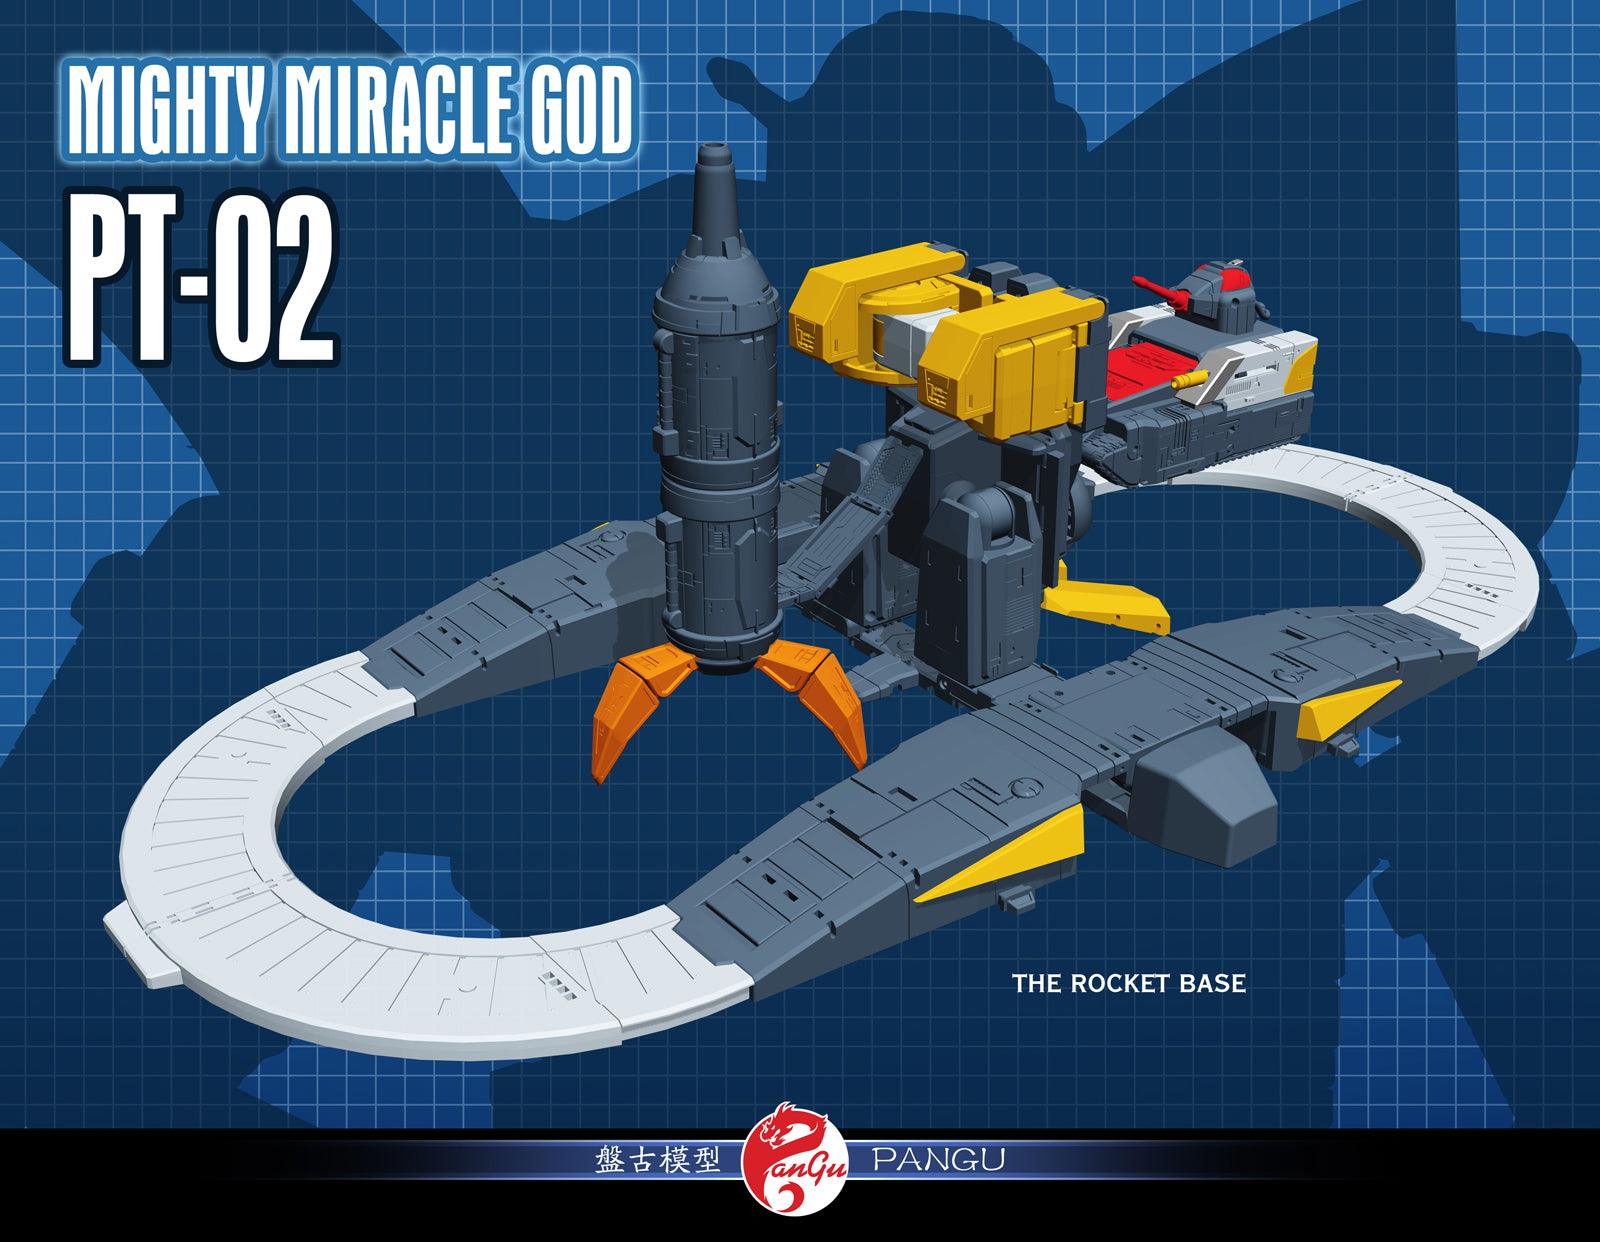 PANGU - PT-02 Mighty Miracle God